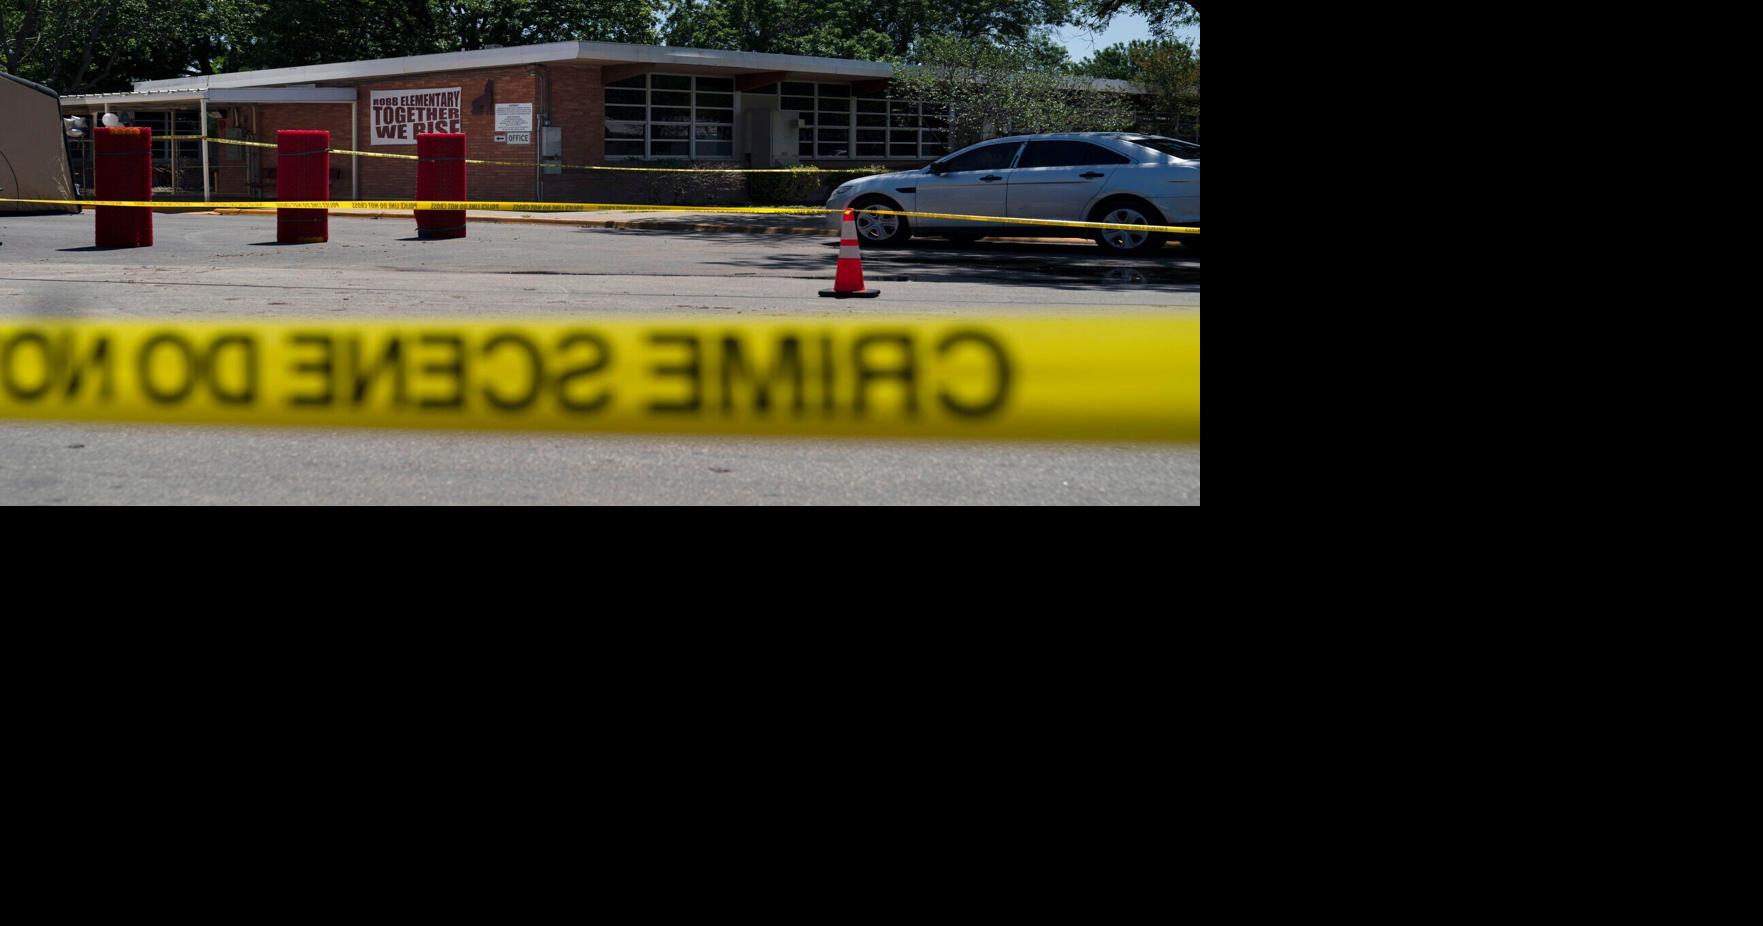 Texas shooting prompts Nebraska school leaders to review school safety